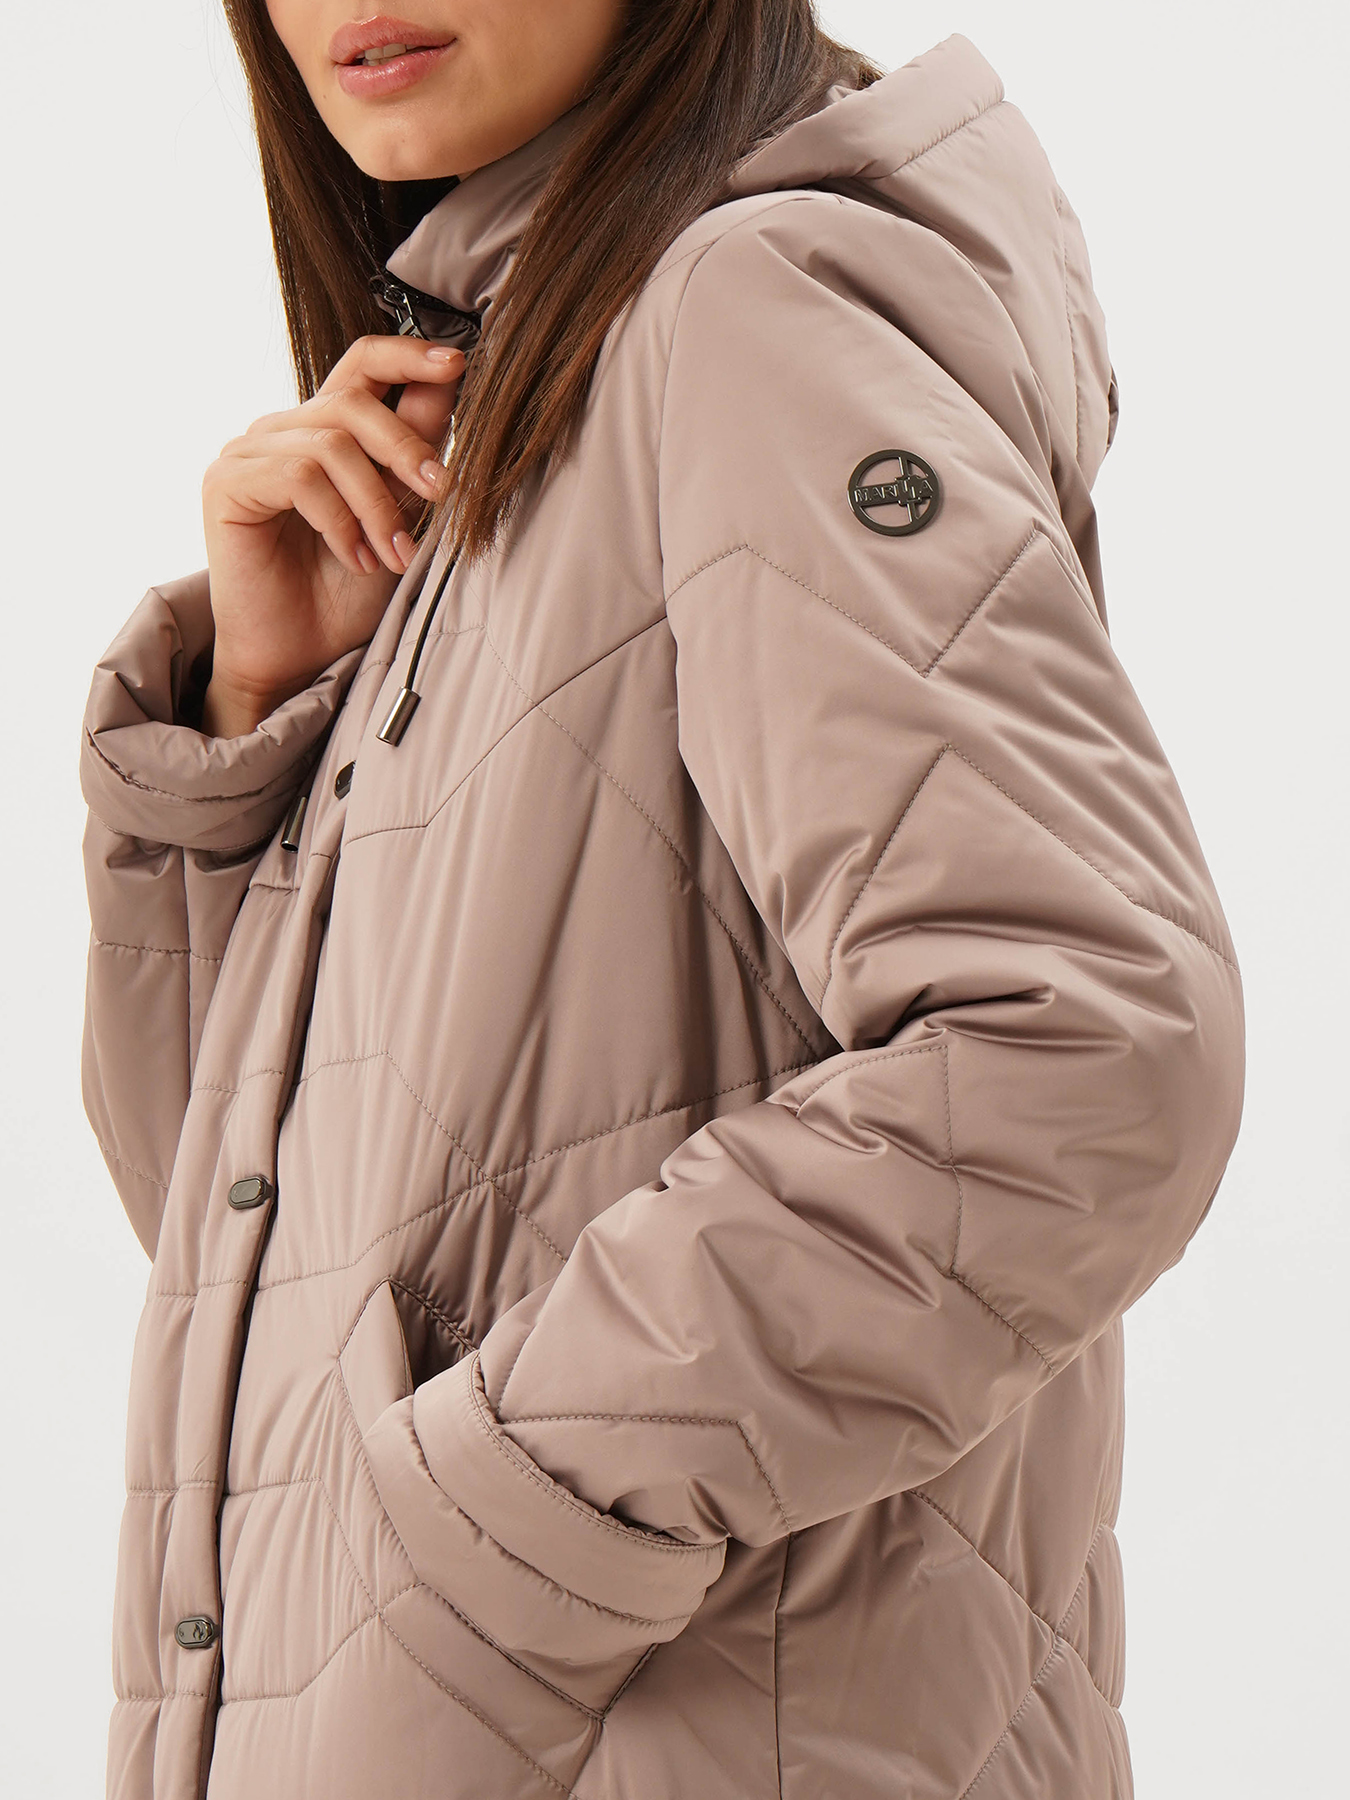 Пальто зимнее Maritta 433520-020, цвет бежевый, размер 44 - фото 2